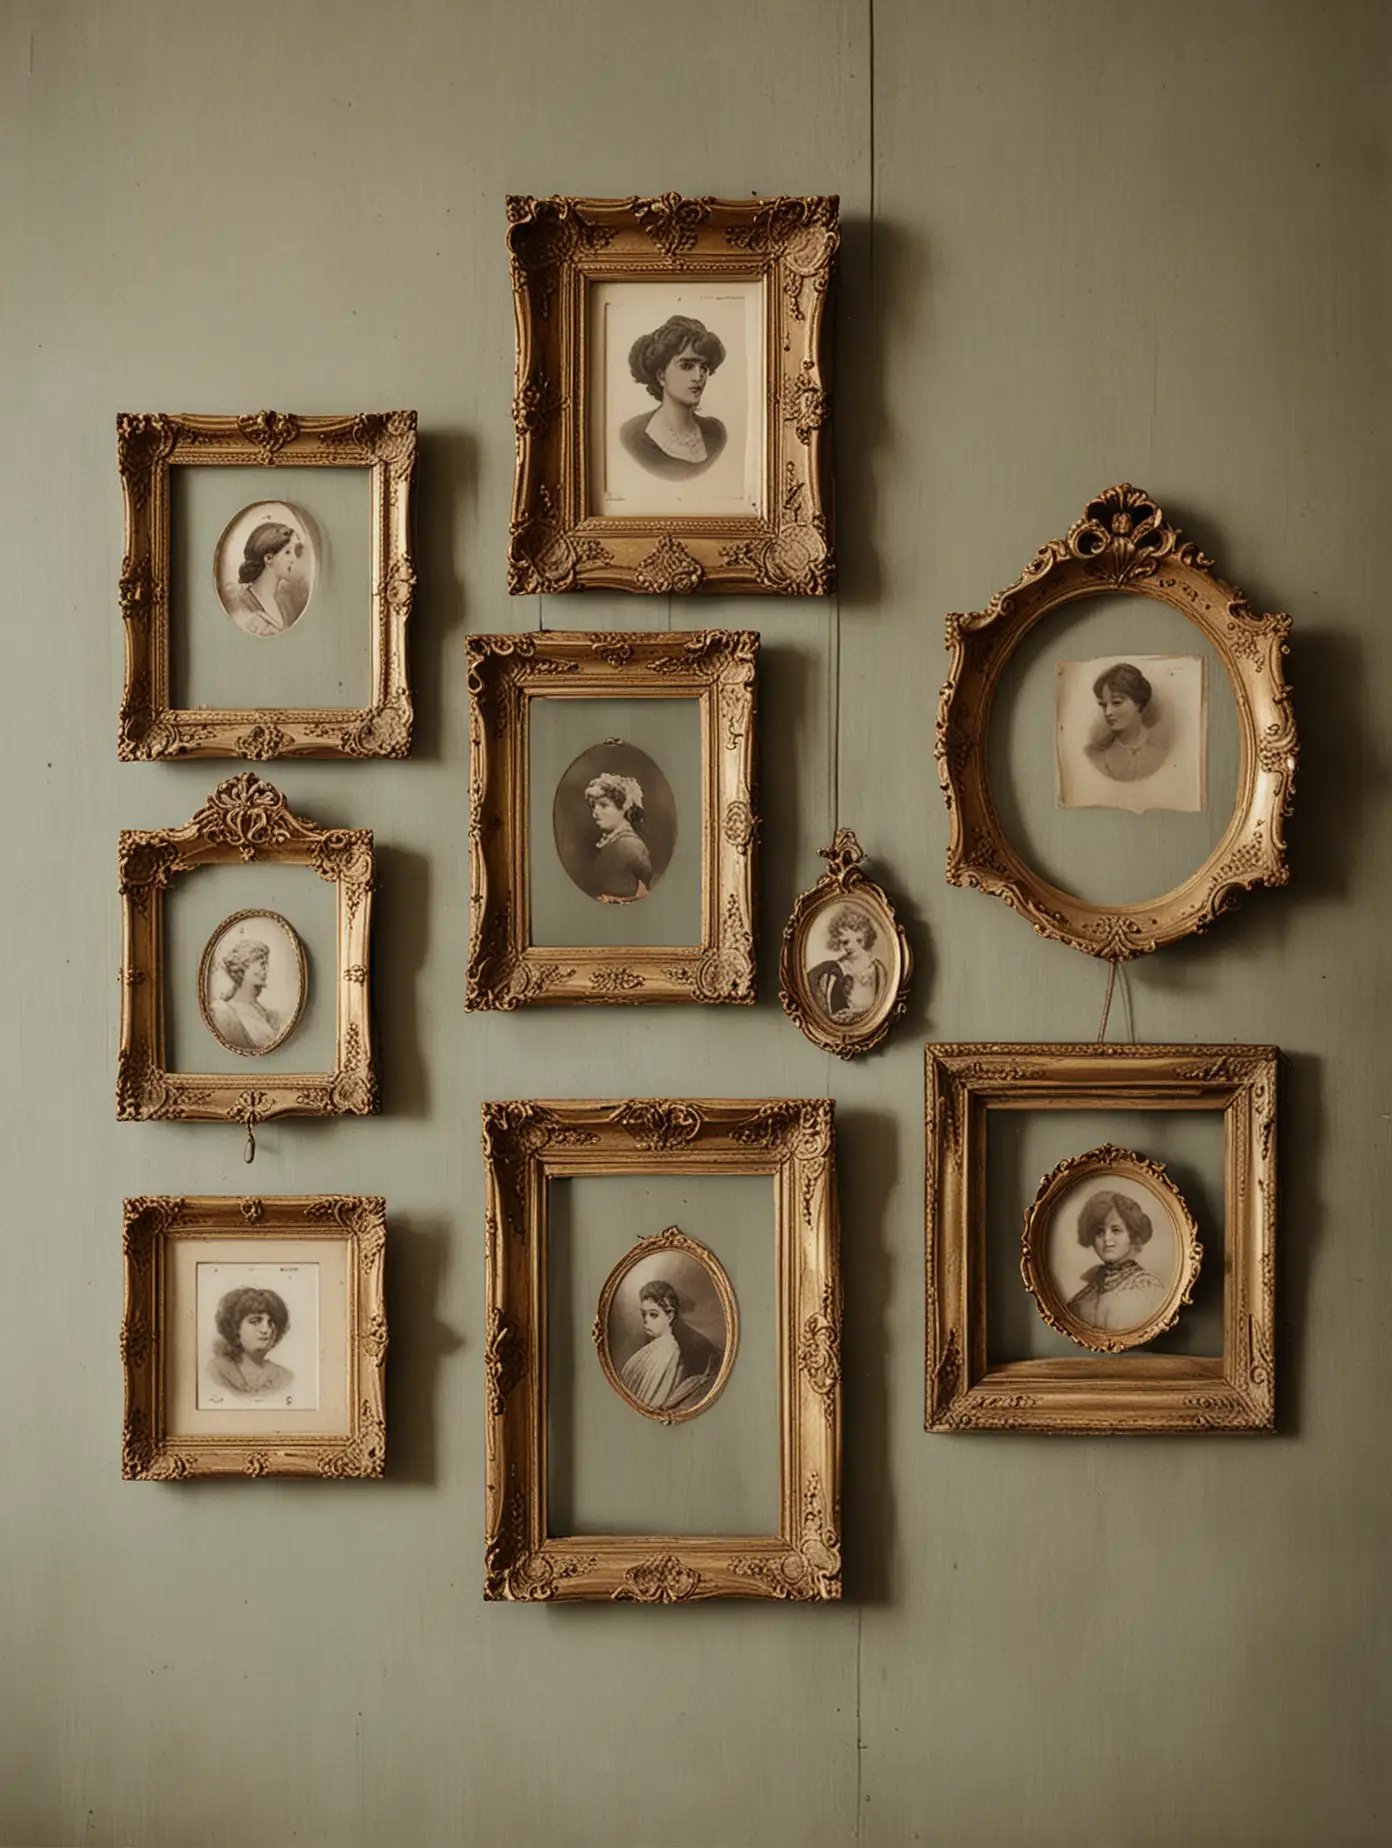 Antique Frames Hanging on Wall with Elegant Ornate Designs